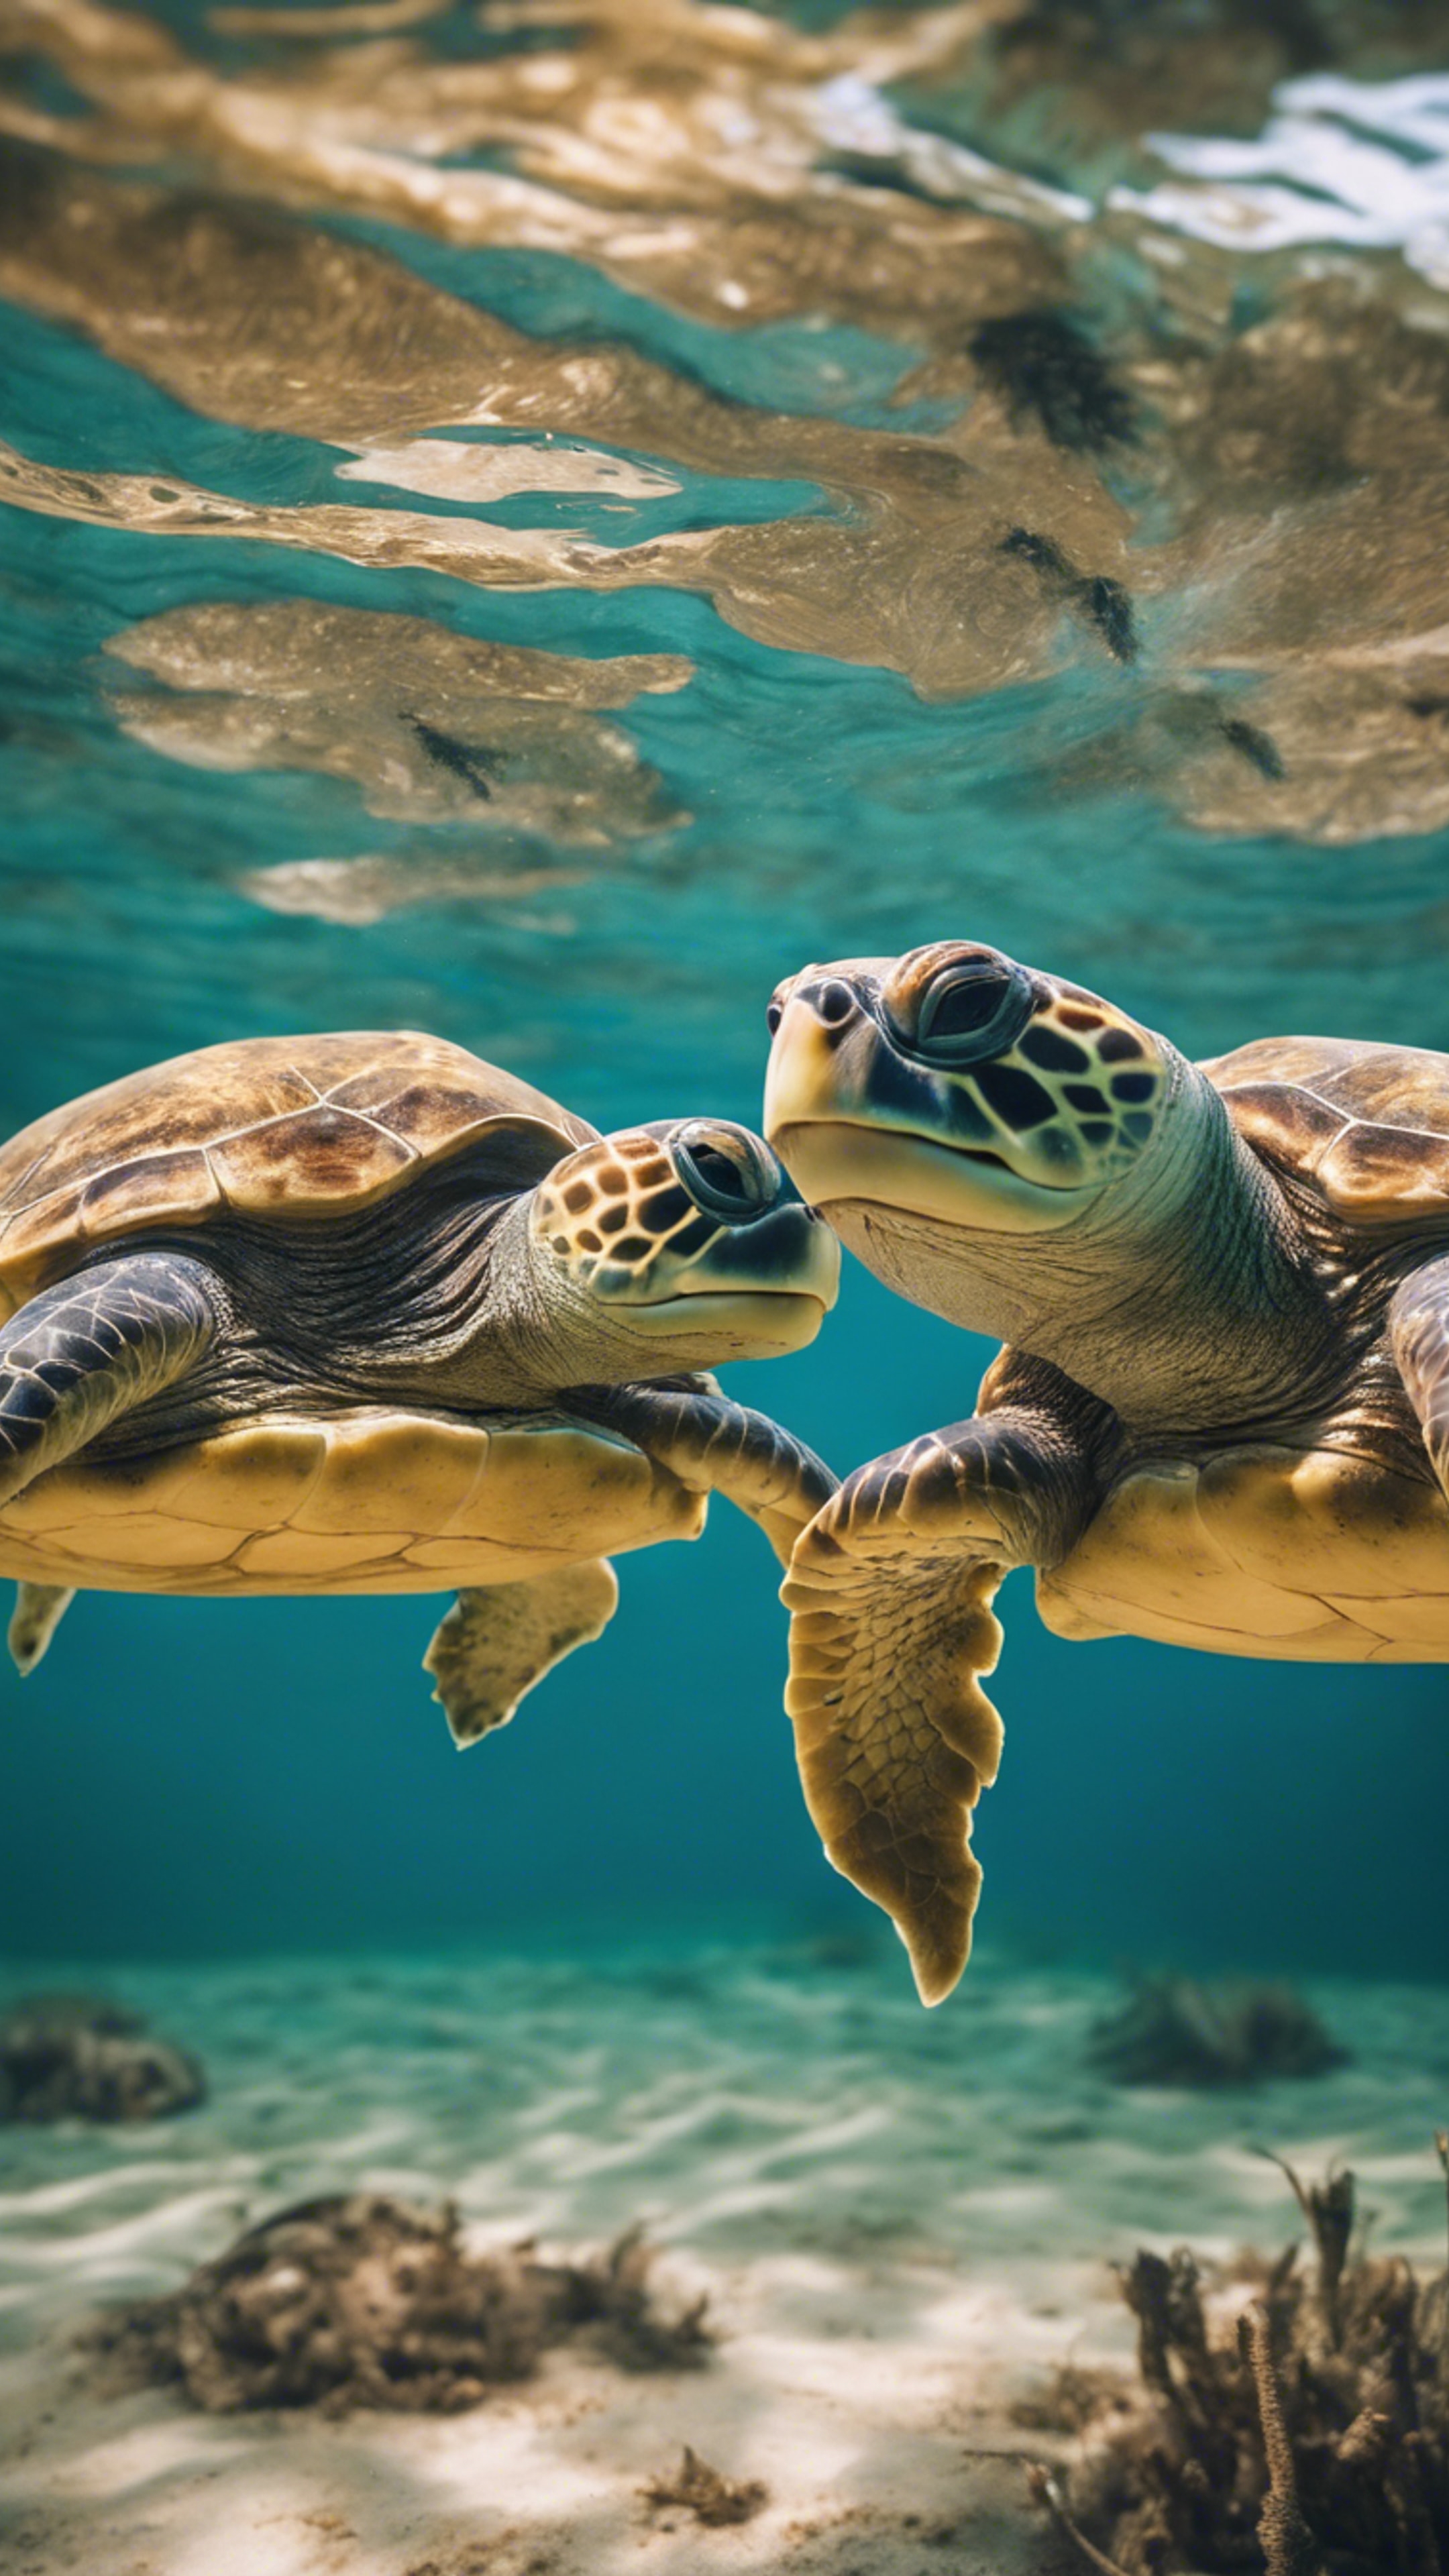 A pair of teenage loggerhead turtles leisurely swimming in warm, tropical waters.壁紙[37e75d6fad0949b8b9fd]